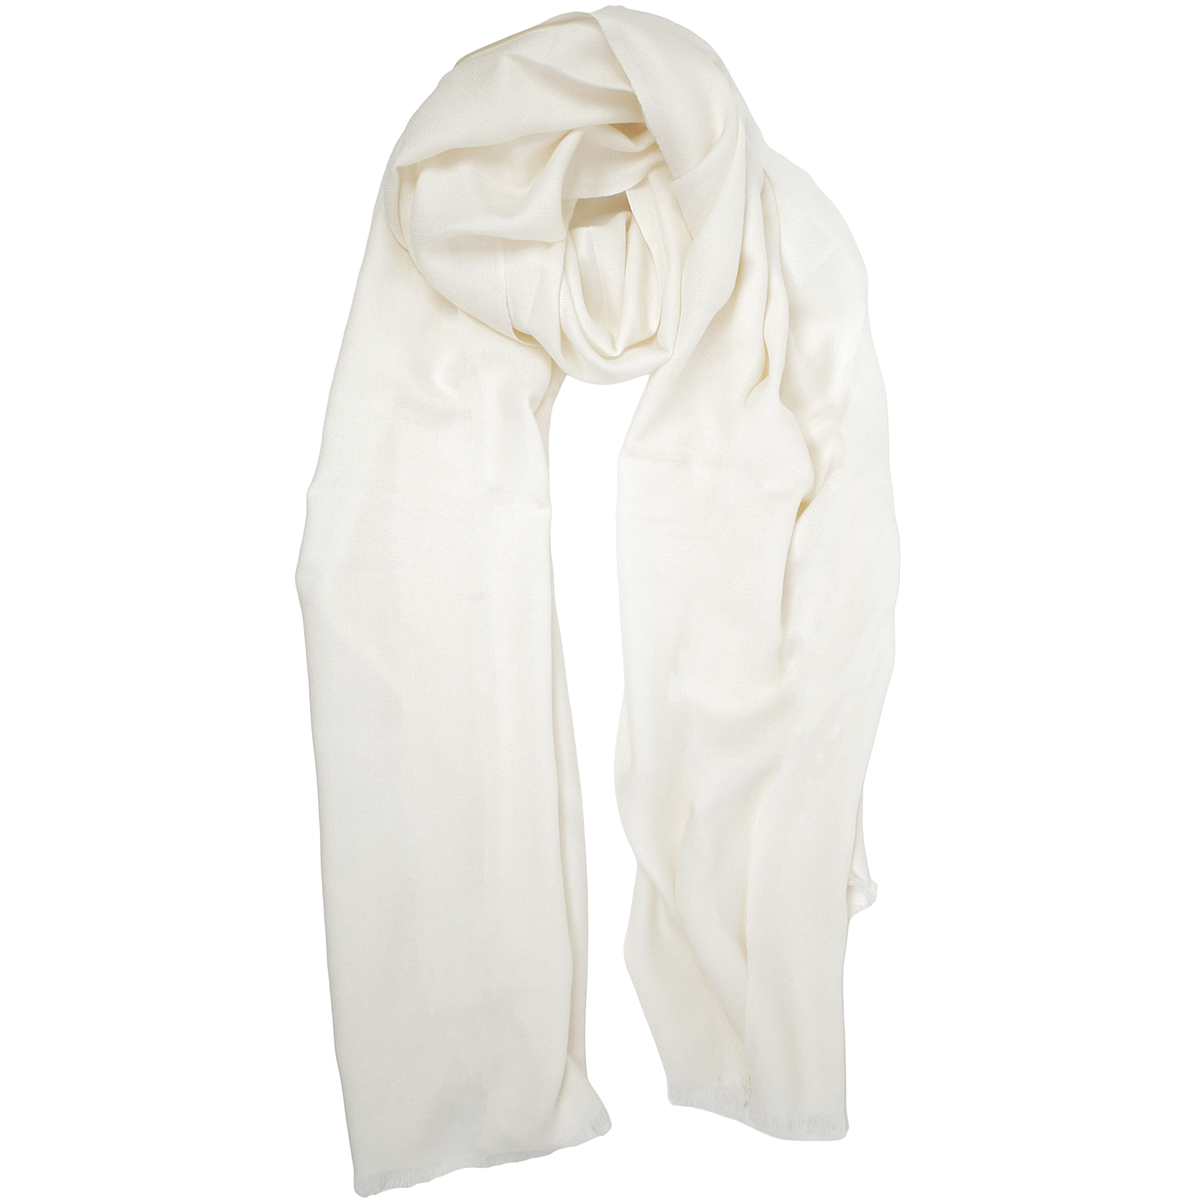 Cashmere and batavia silk scarf Thuile